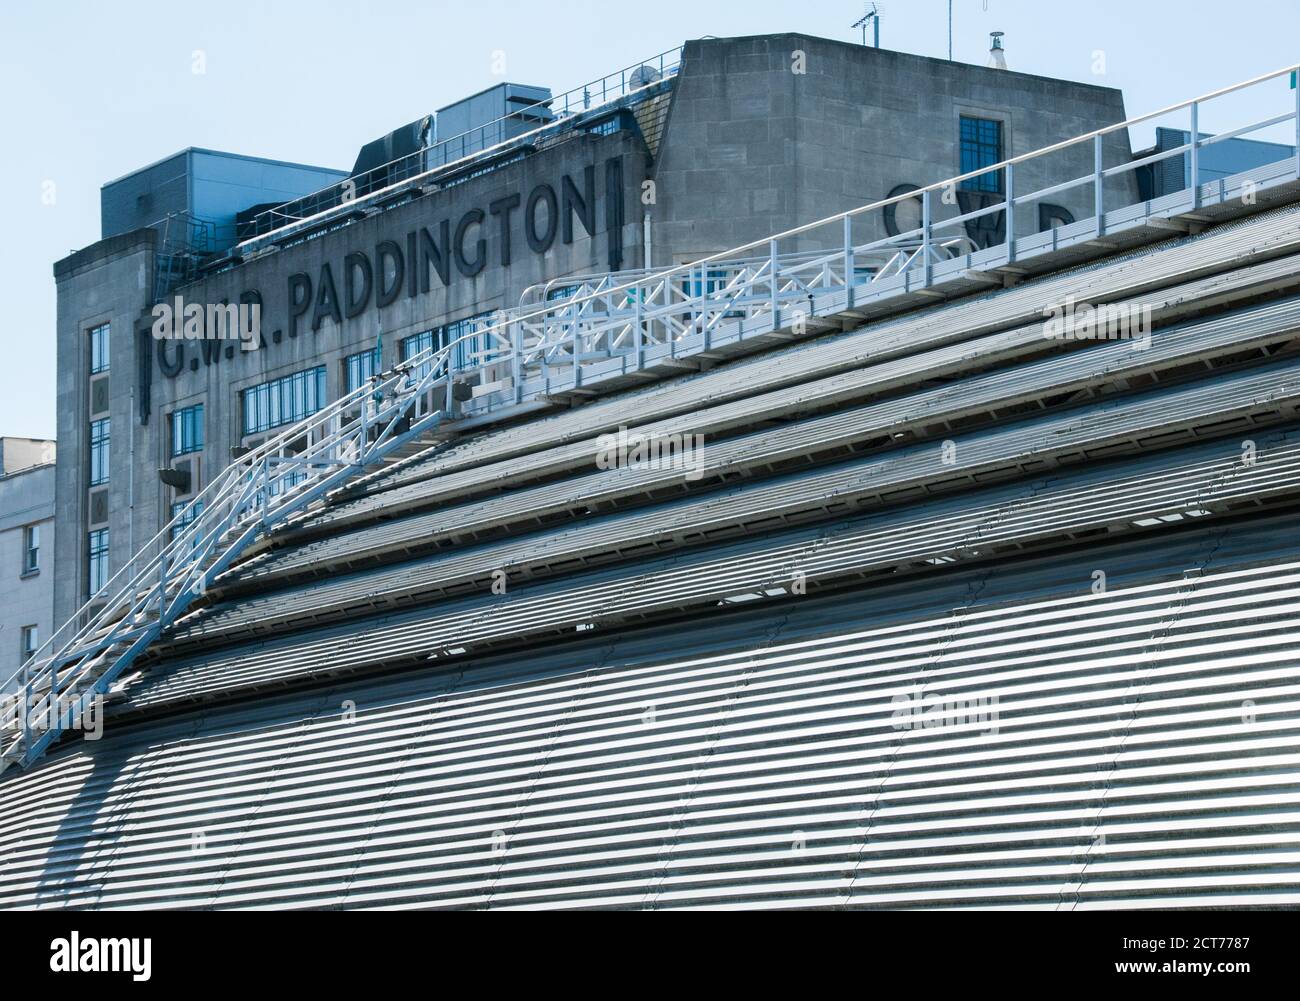 Great Western Railway offices, Paddington Railway Station, Paddington, London Stock Photo